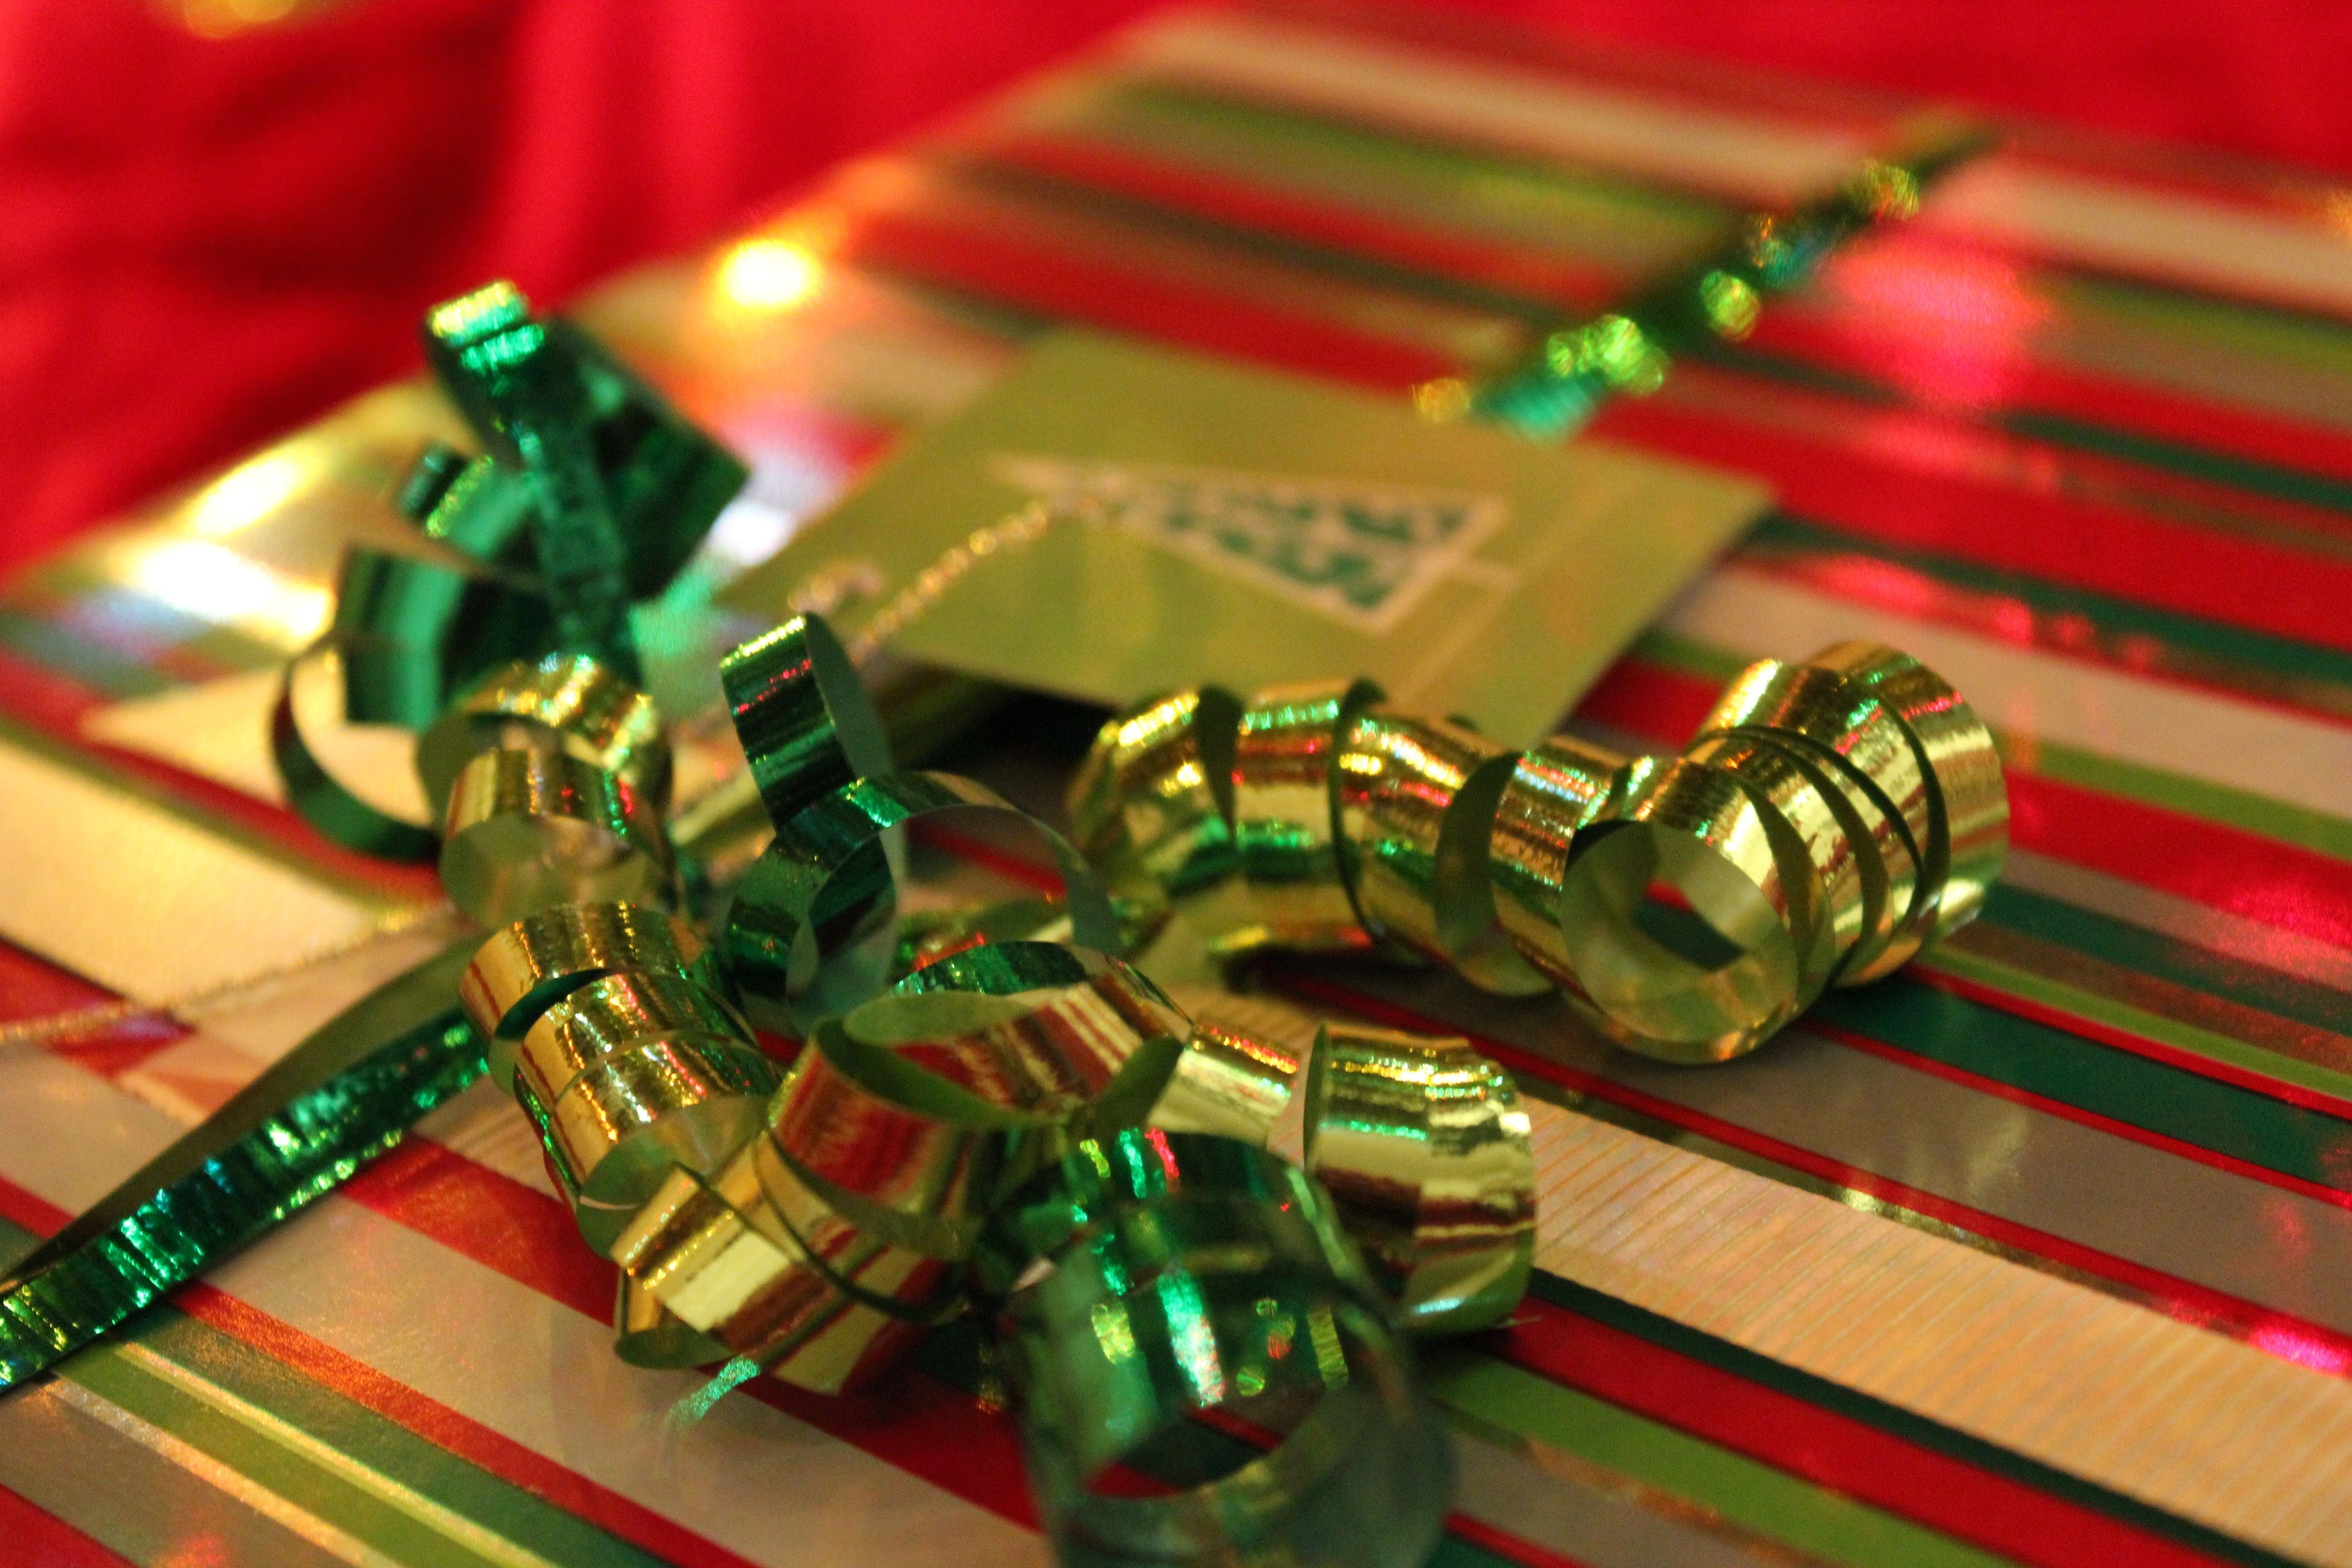 A ribbon decorates a Christmas present.